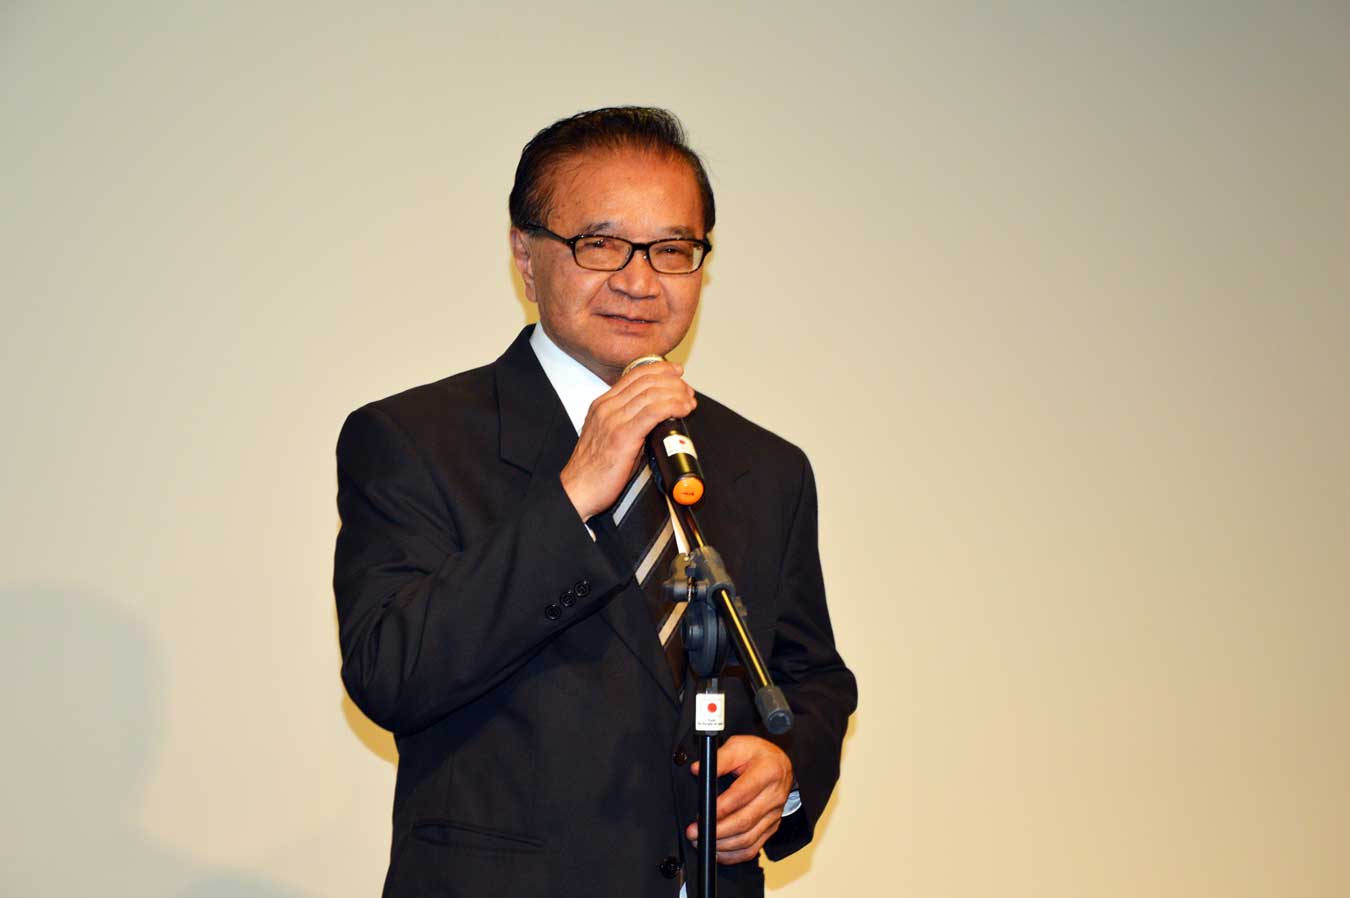 Presidente da Aliança, Yokio Oshiro agradece a presença de todos. Foto: Luci Judice Yizima